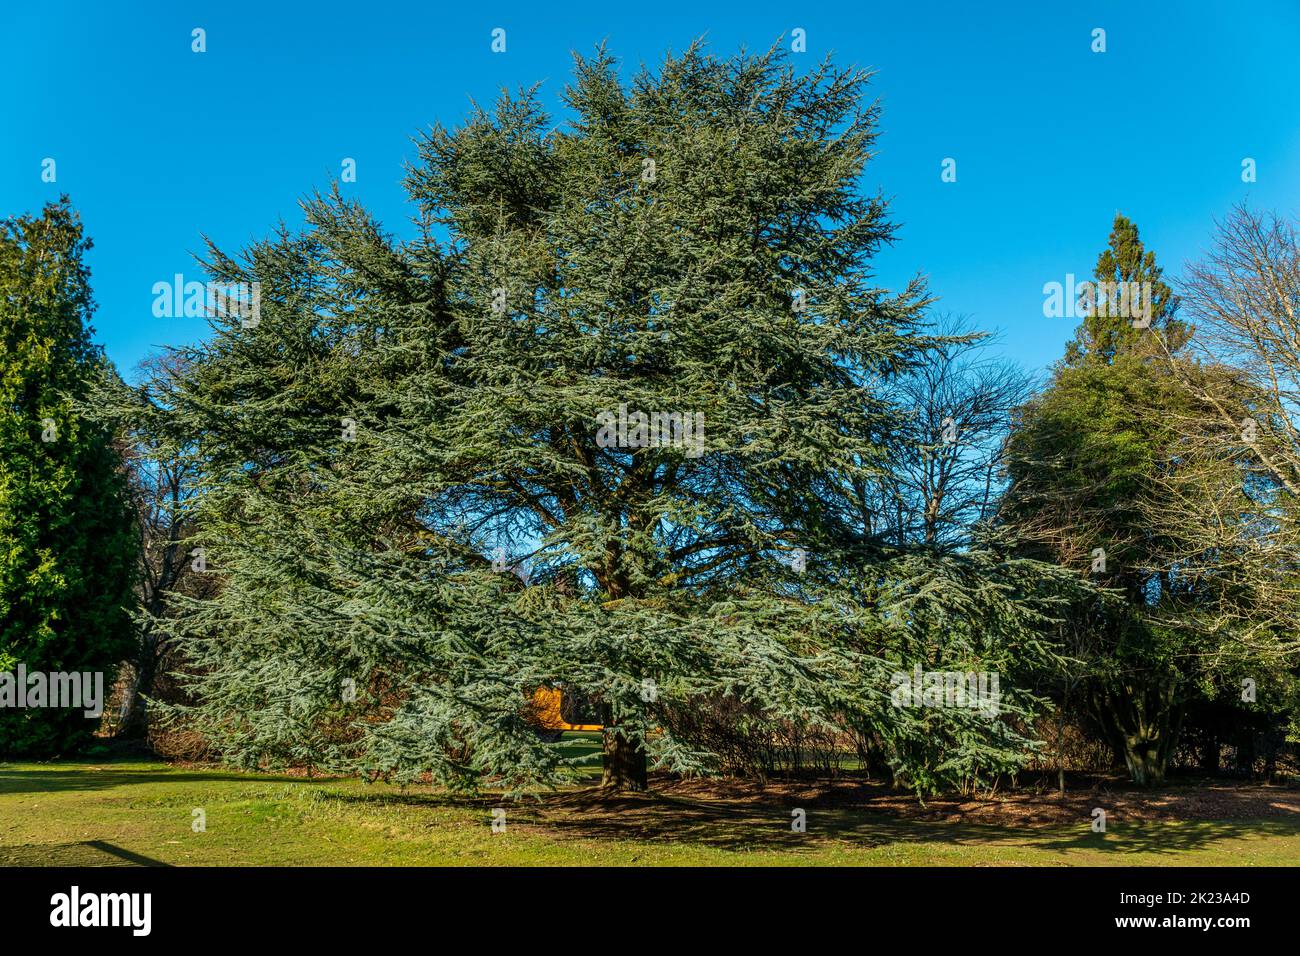 The tree of the garden form of the Atlas Cedar. Stock Photo